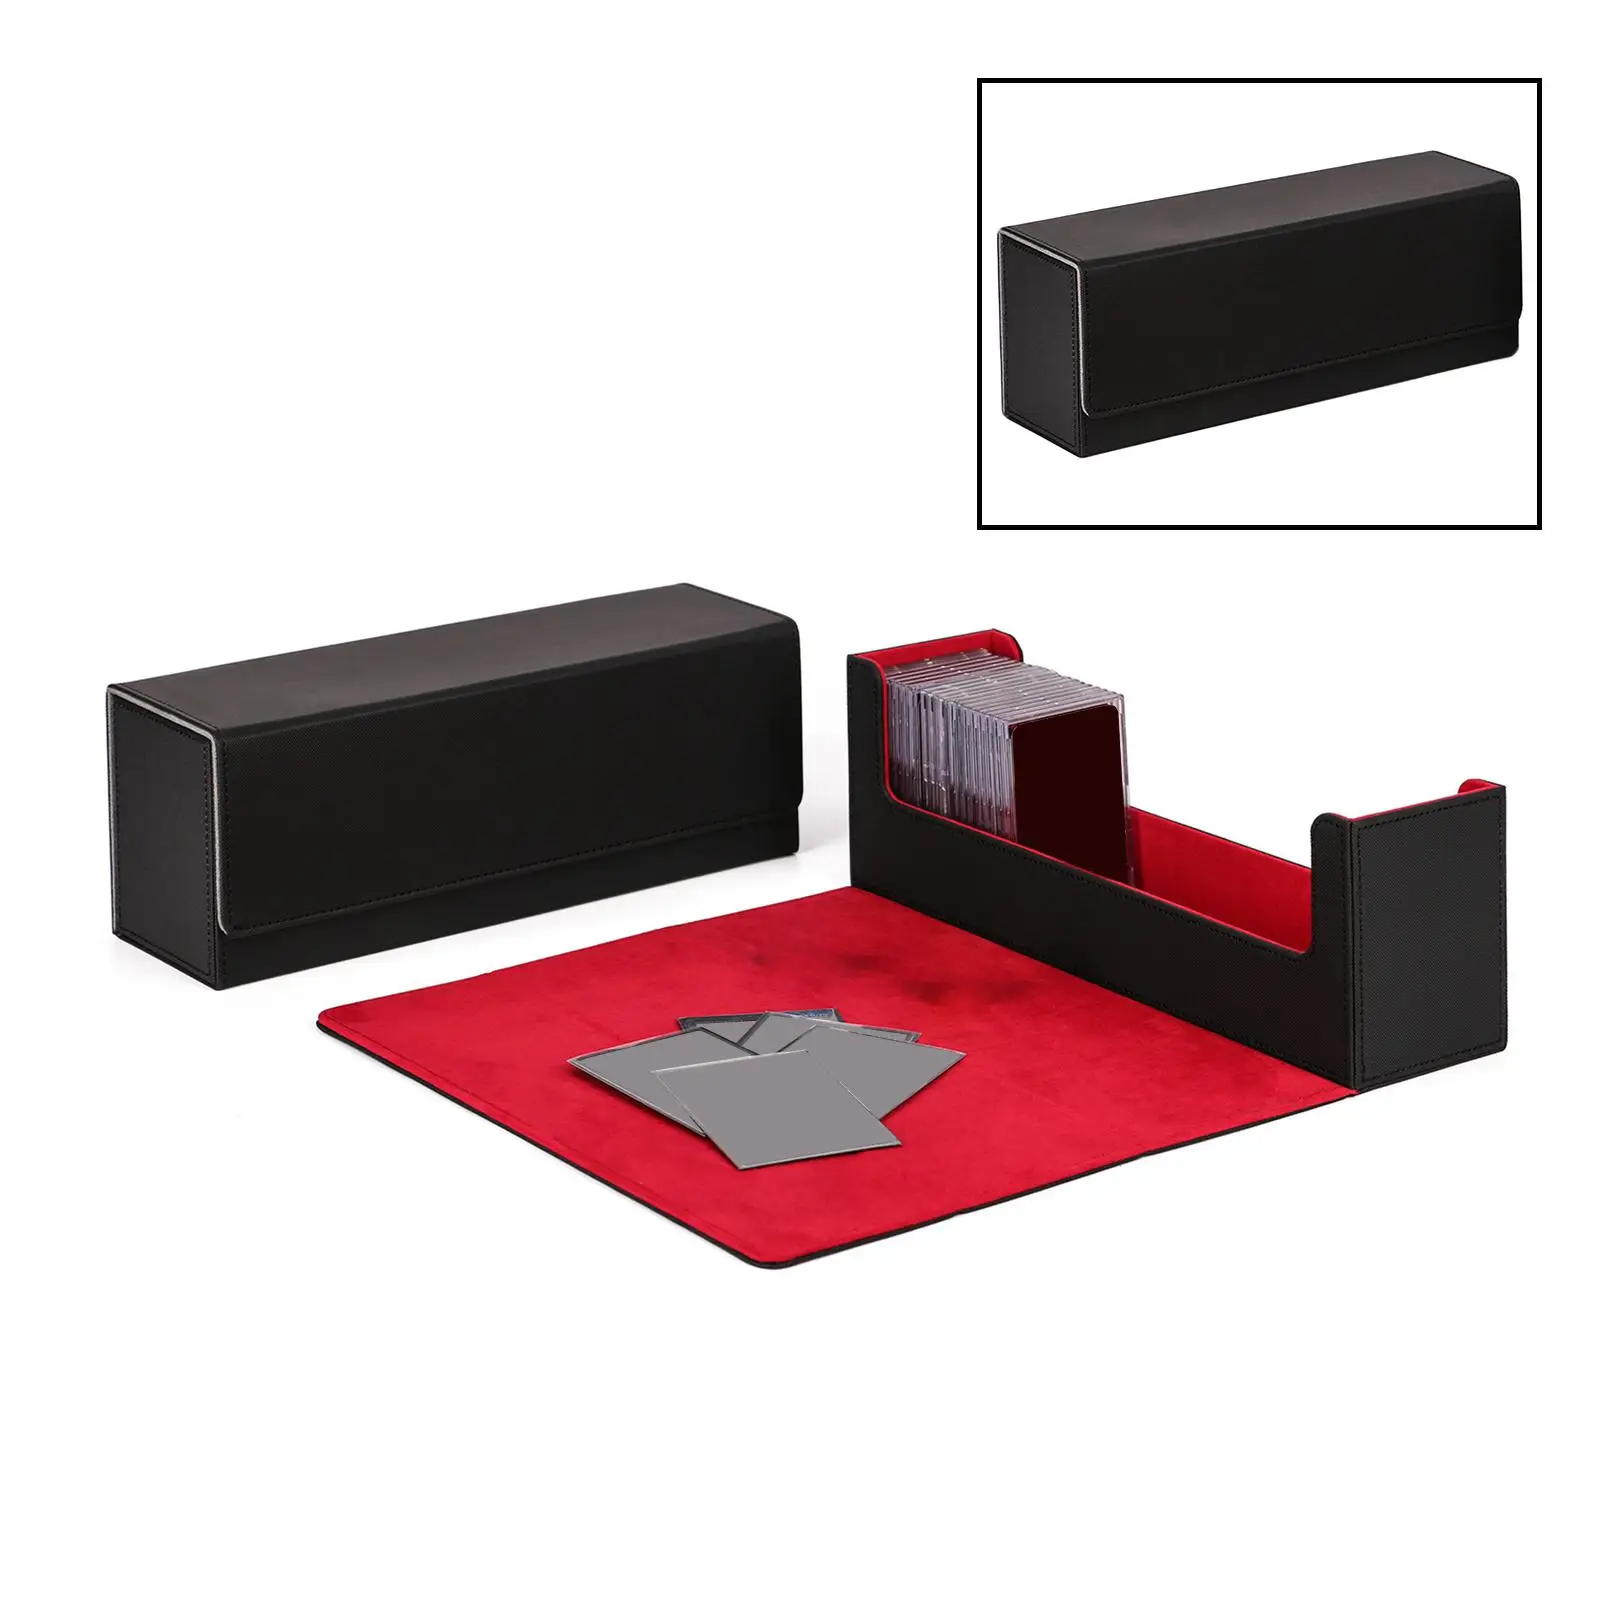 2 Deck Box, Card Deck Holder Organiser, Card Deck Box Storage, Card Deck Case Large Size for 400 Cards